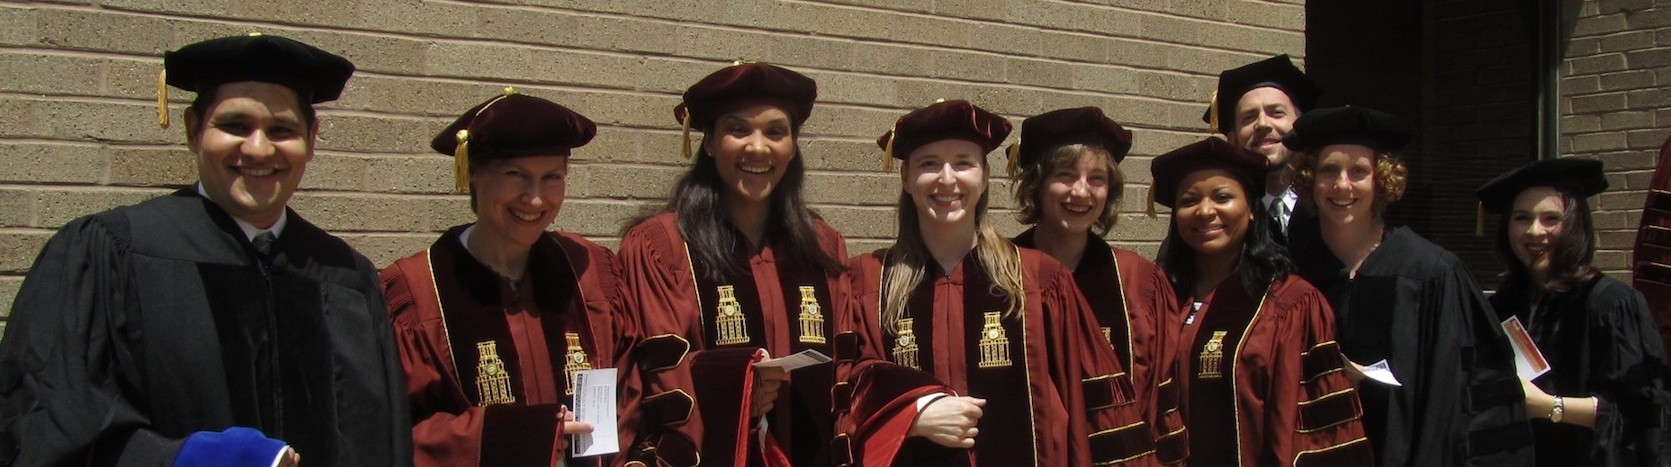 2012 UT Austin Sociology graduates ready to change the world